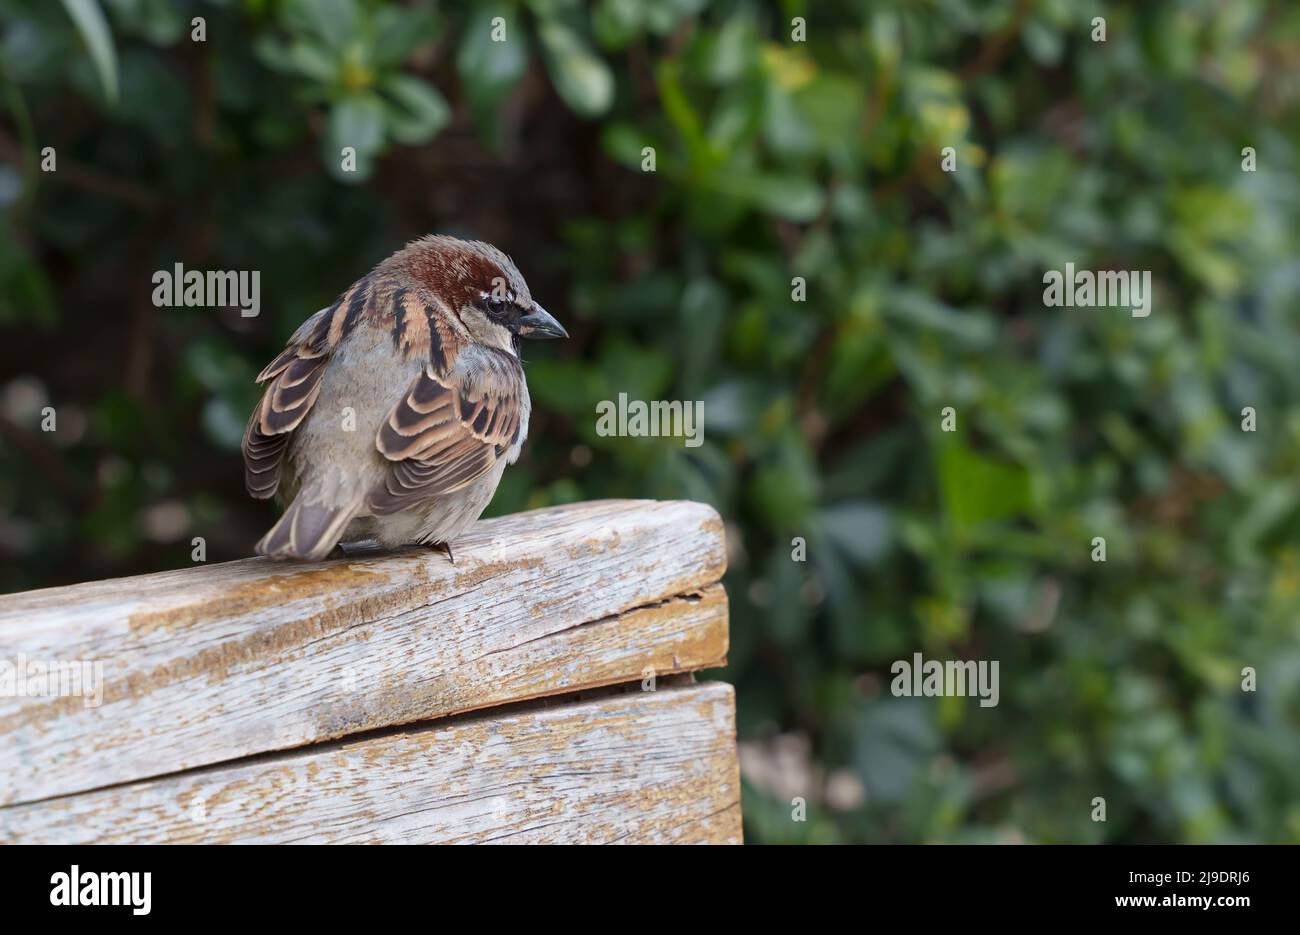 Un primer plano de un pájaro gorrión común encaramado en un banco de madera. Retrato del gorrión de árboles eurasiáticos, ornitología y concepto de observación de aves. sparrow bir Foto de stock